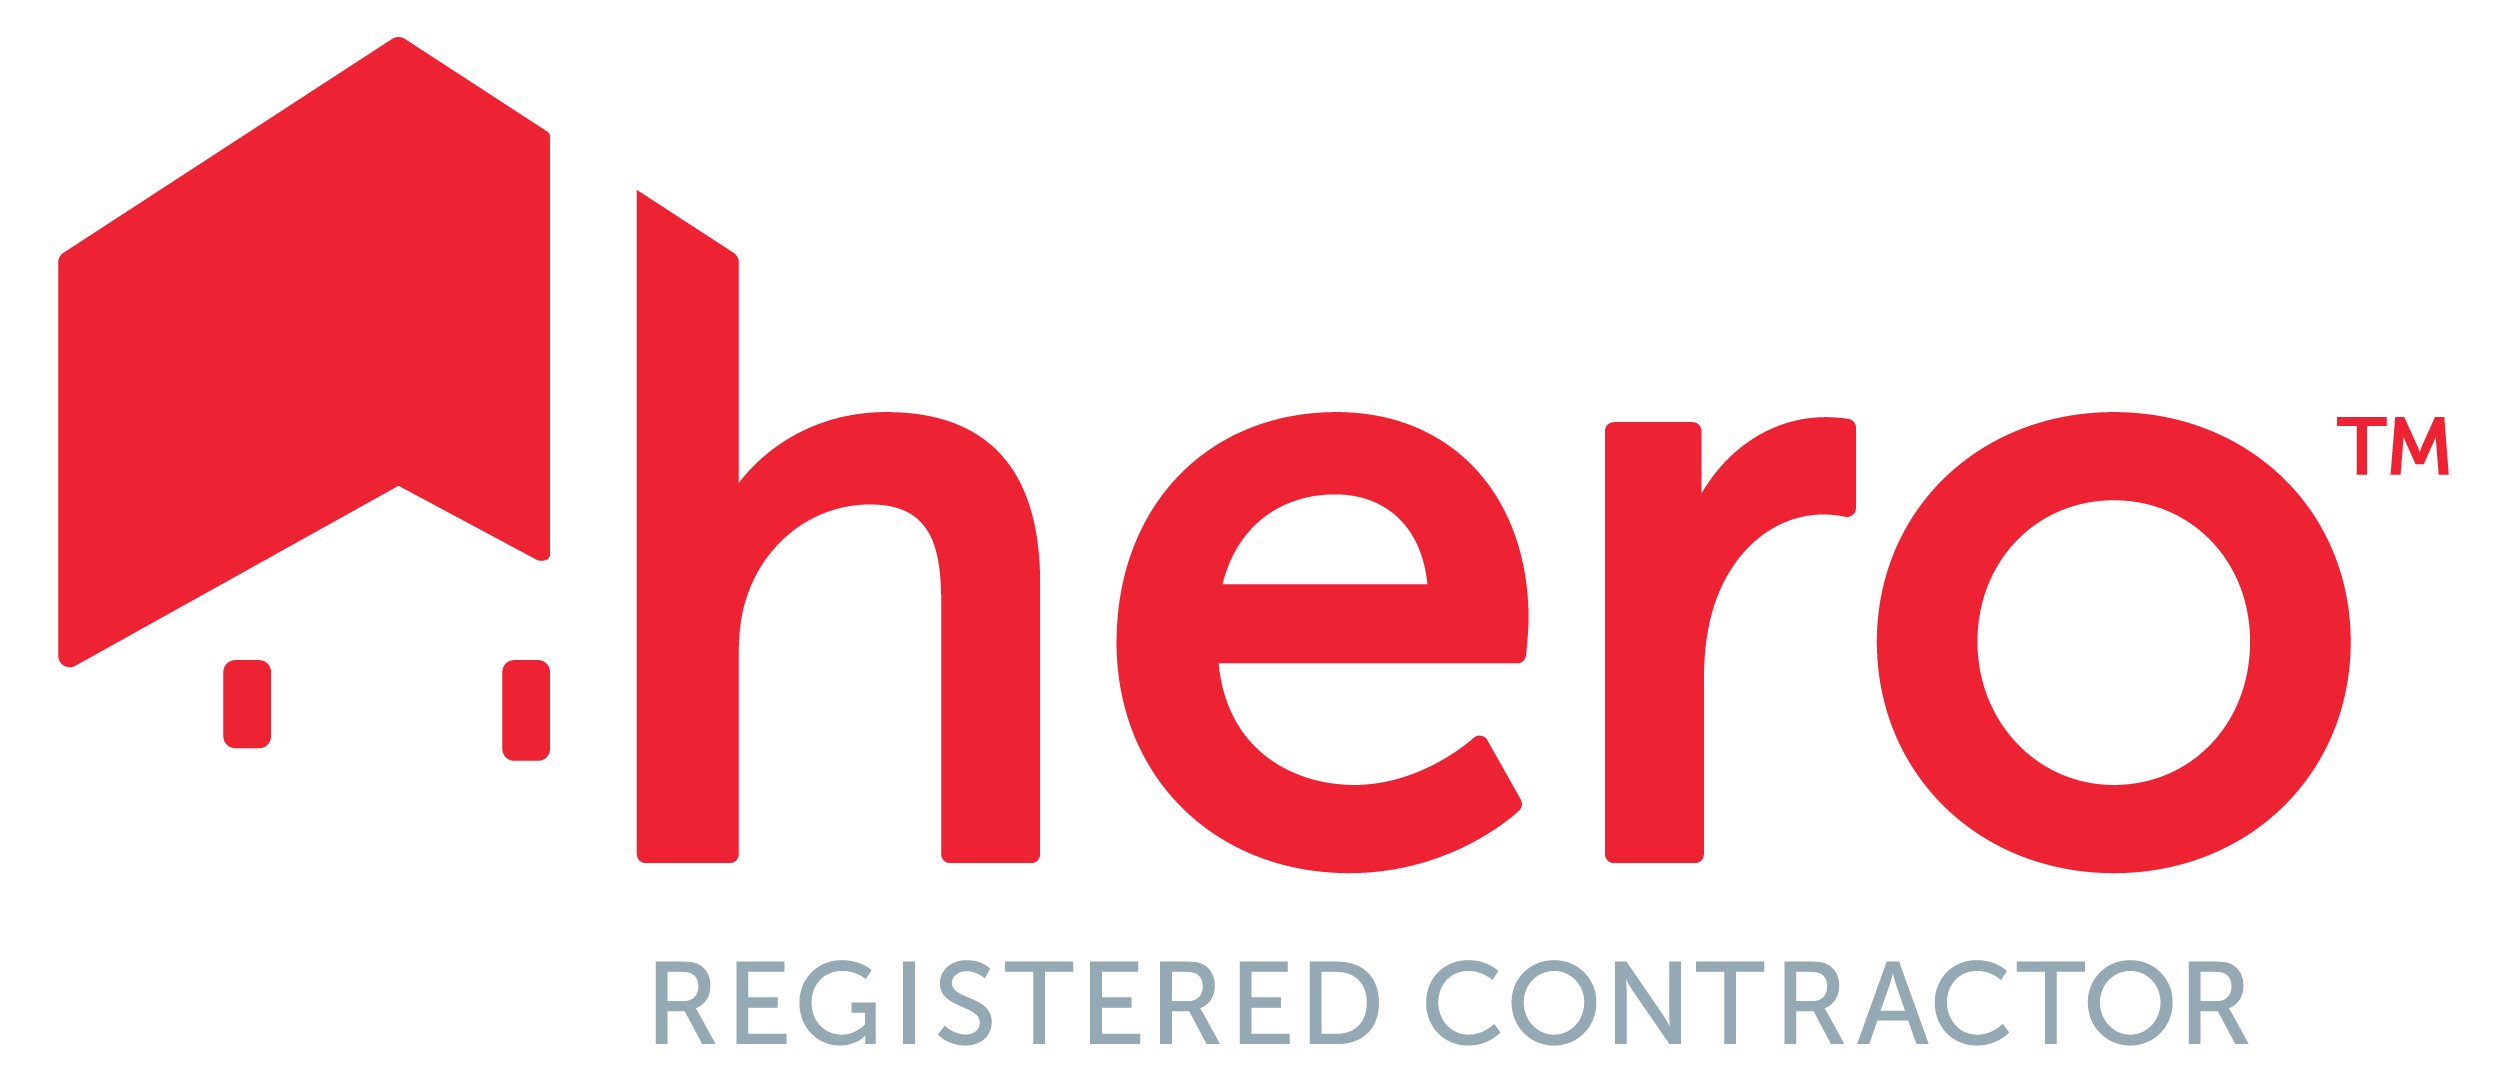 HERO_Logo_RegisteredContractor_Red_WEB.png